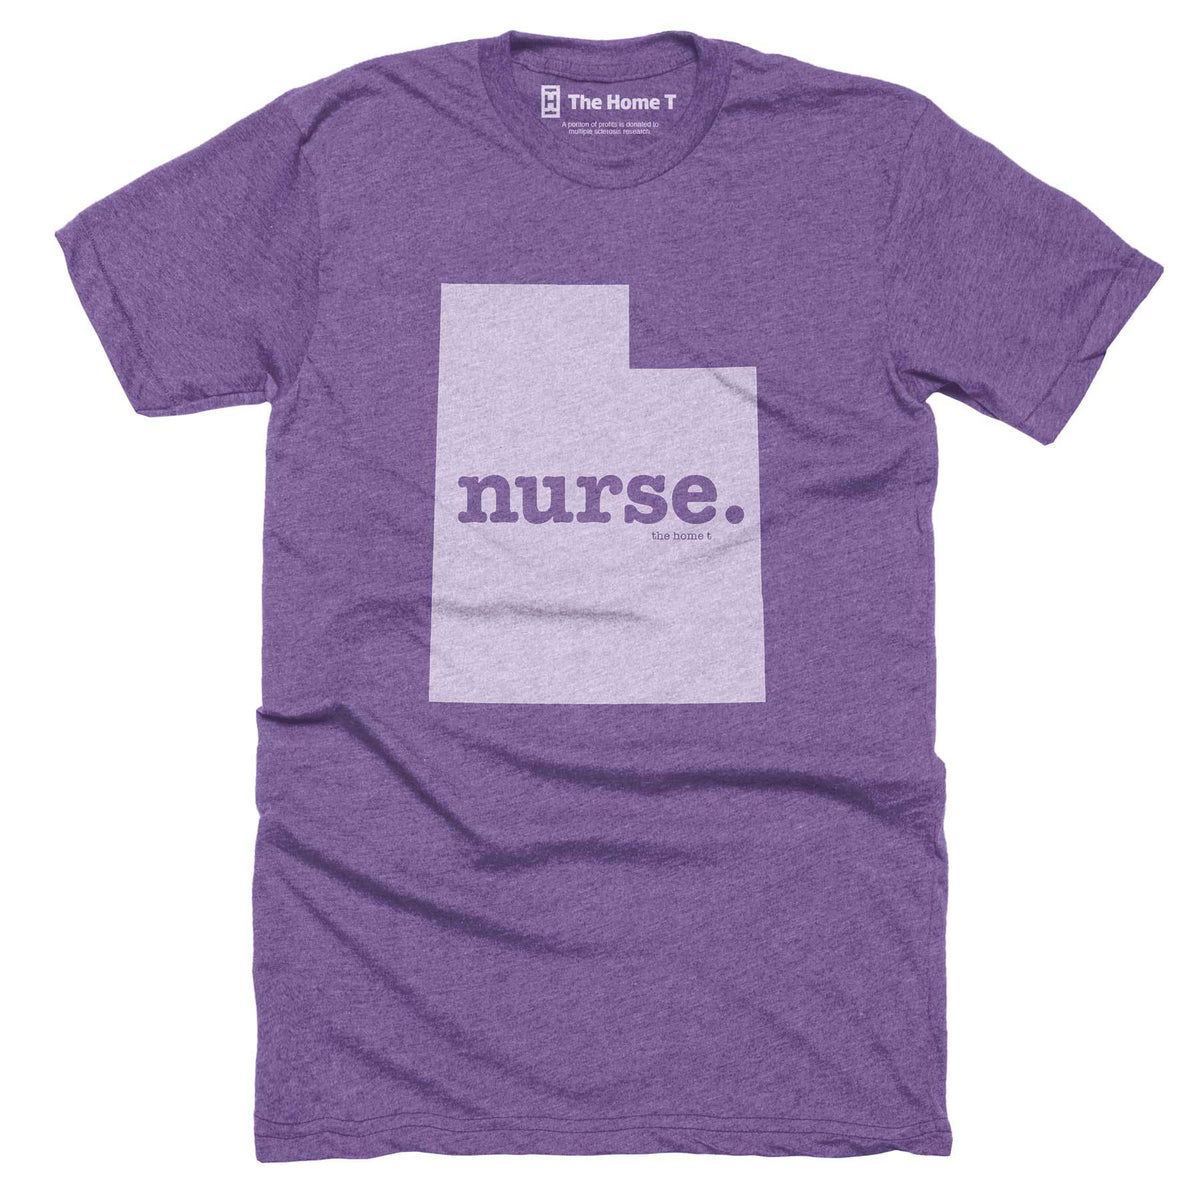 Utah Nurse Home T-Shirt Occupation The Home T